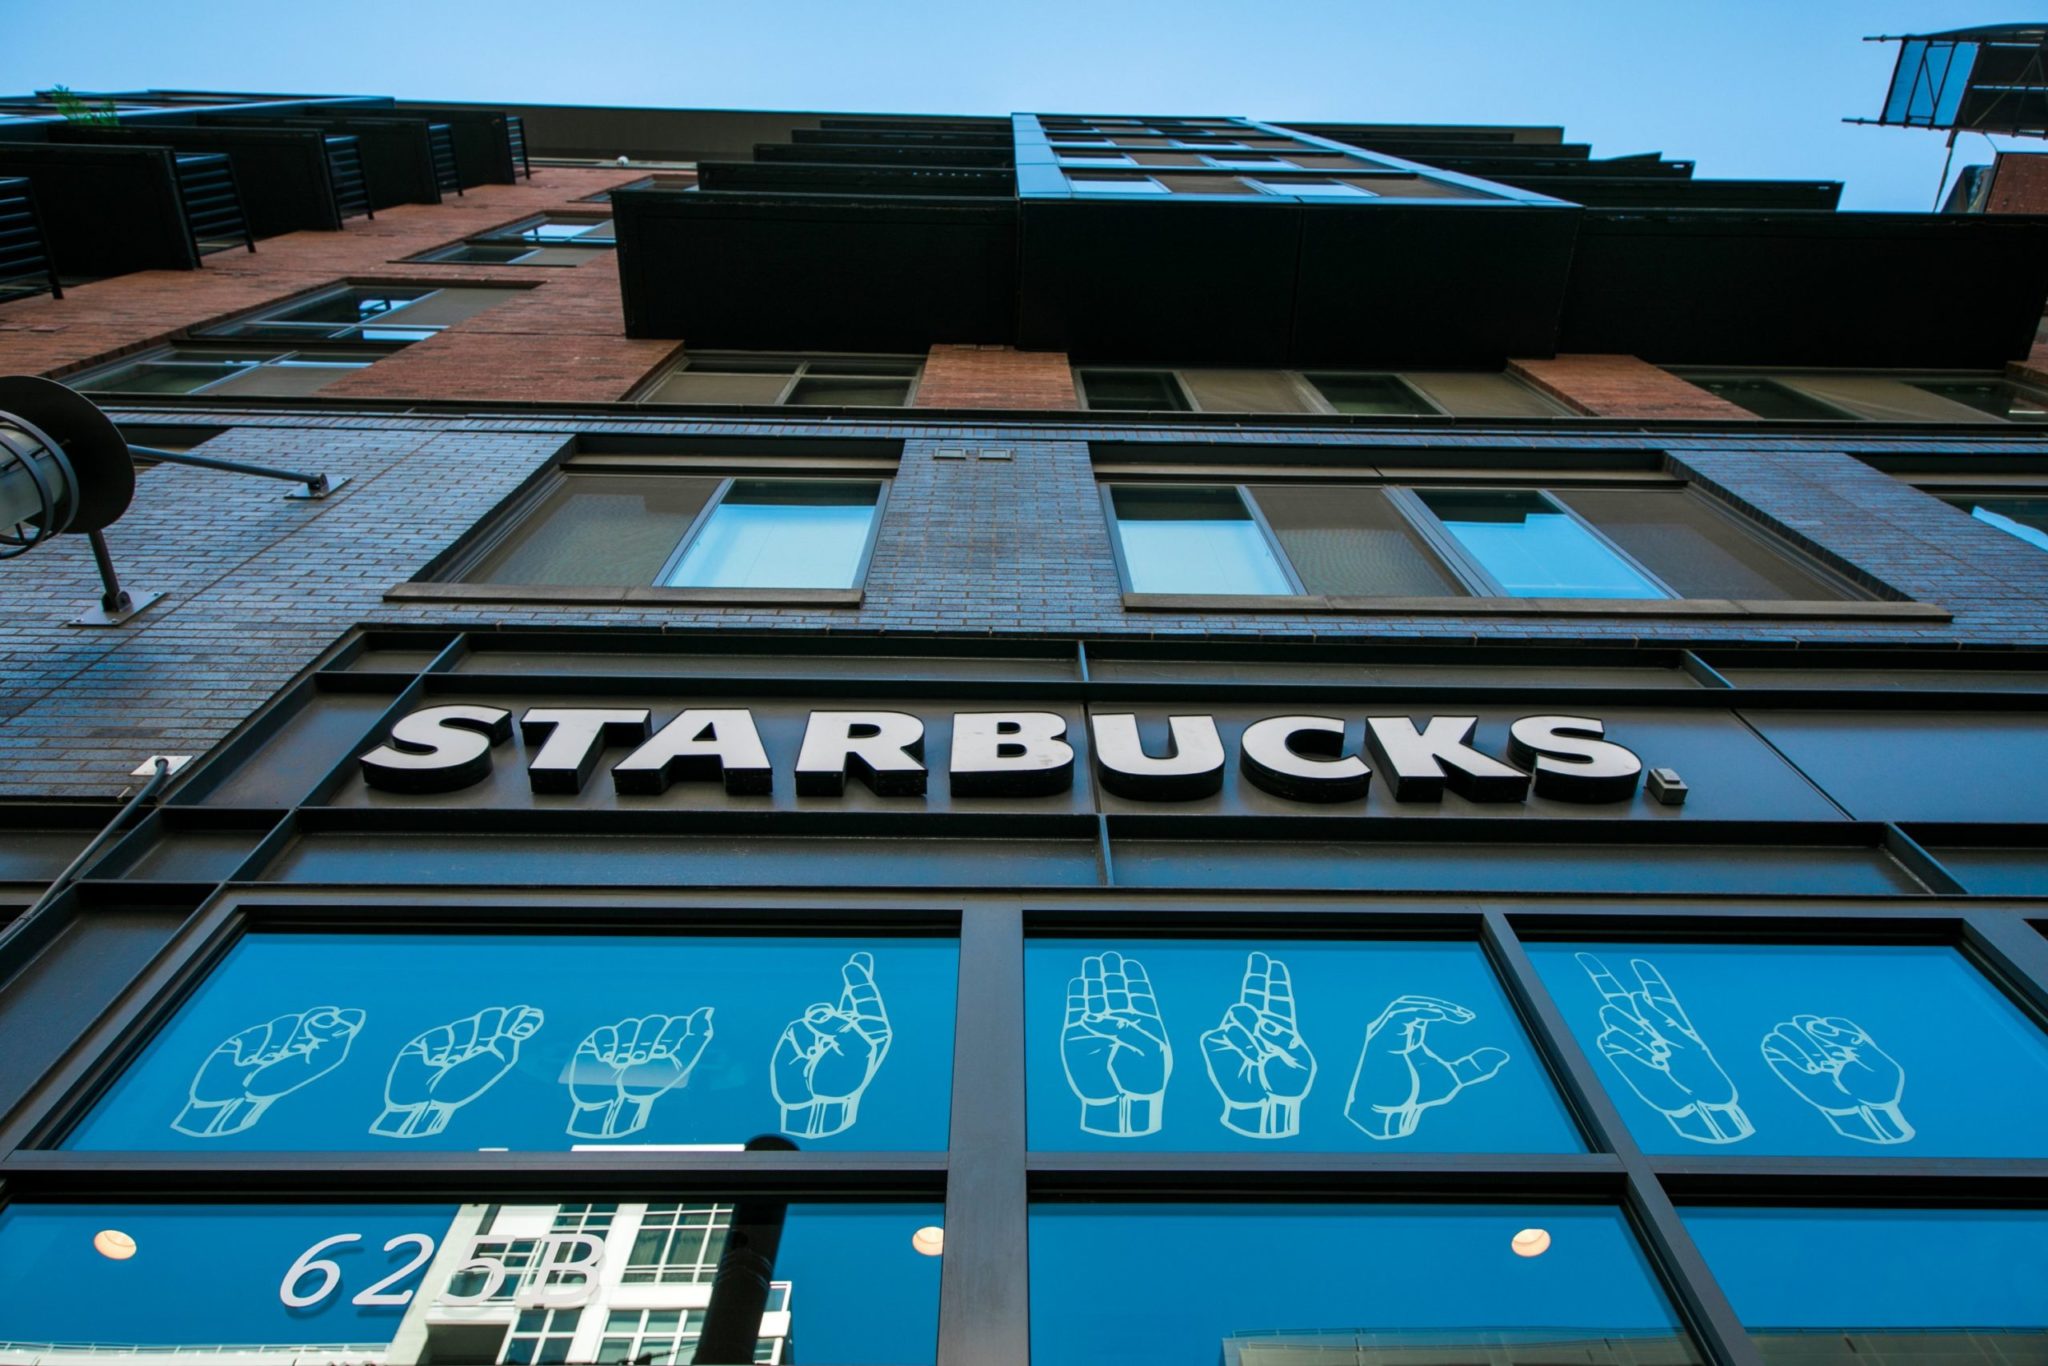 Starbucks' first US signing location. Photograph by Joshua Trujillo, Starbucks.